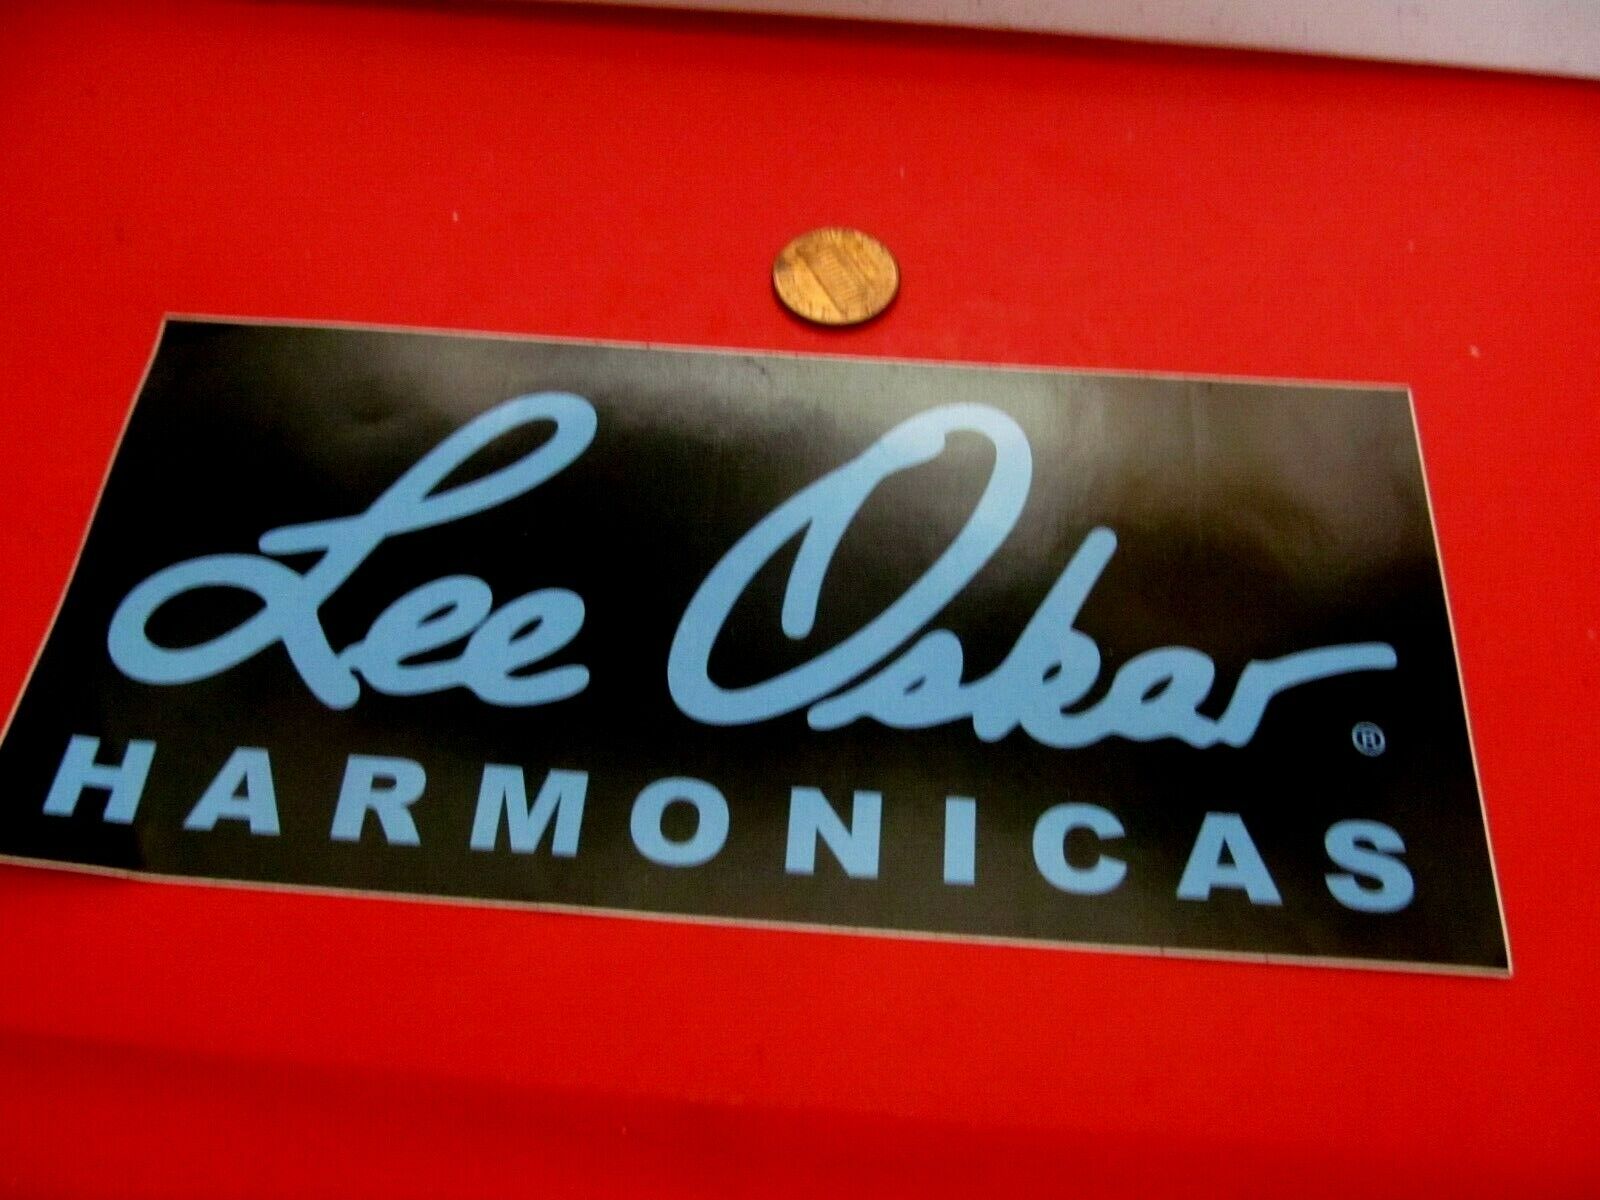 LEE OSKAR HARMONICAS Sticker Decal Original Old stock MUSIC